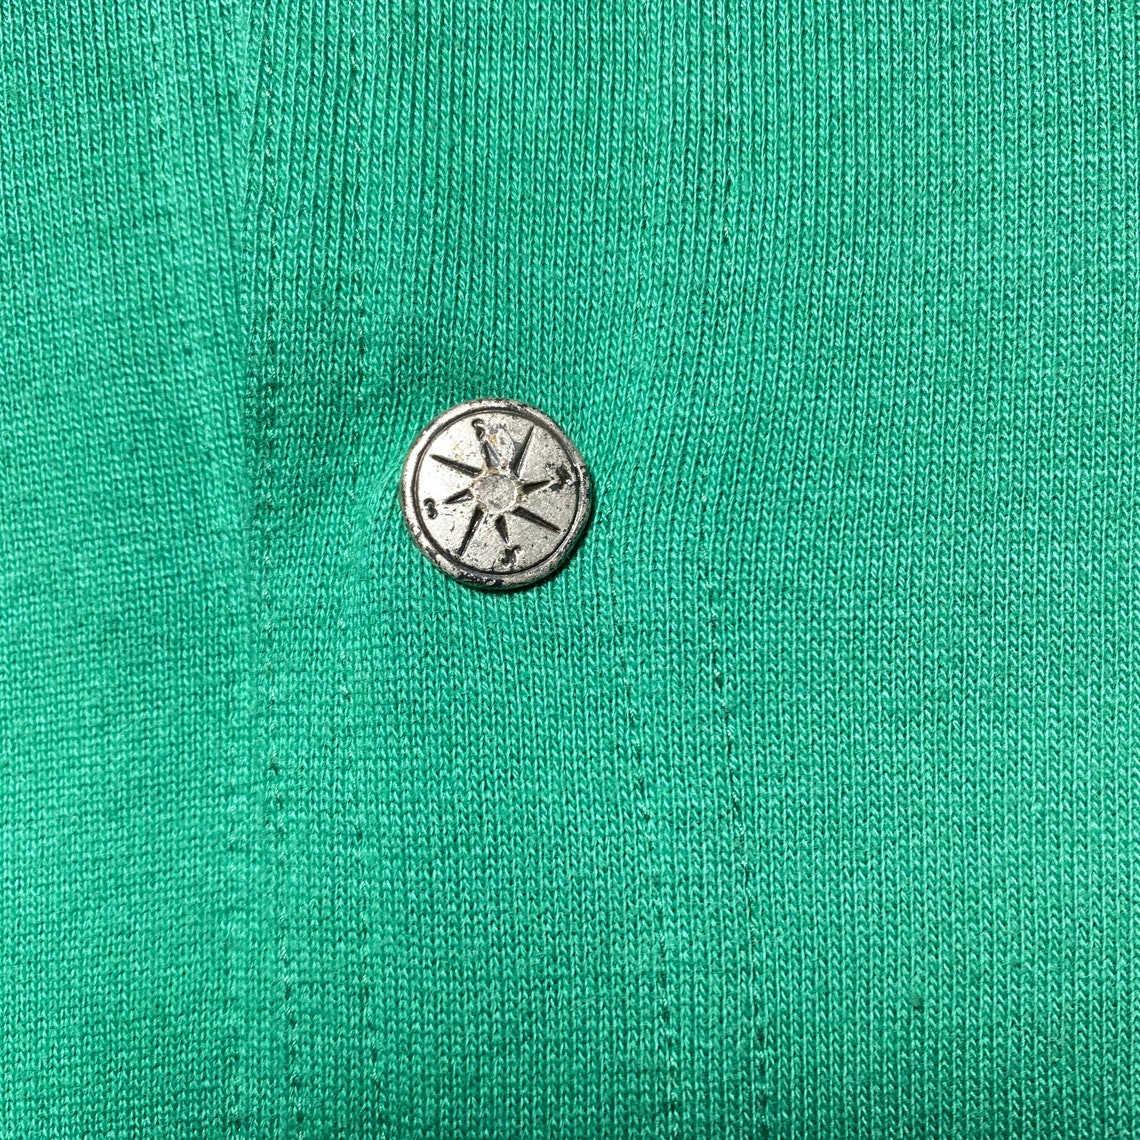 GreenStone Park green sweatshirt button up cotton shirt with | Etsy